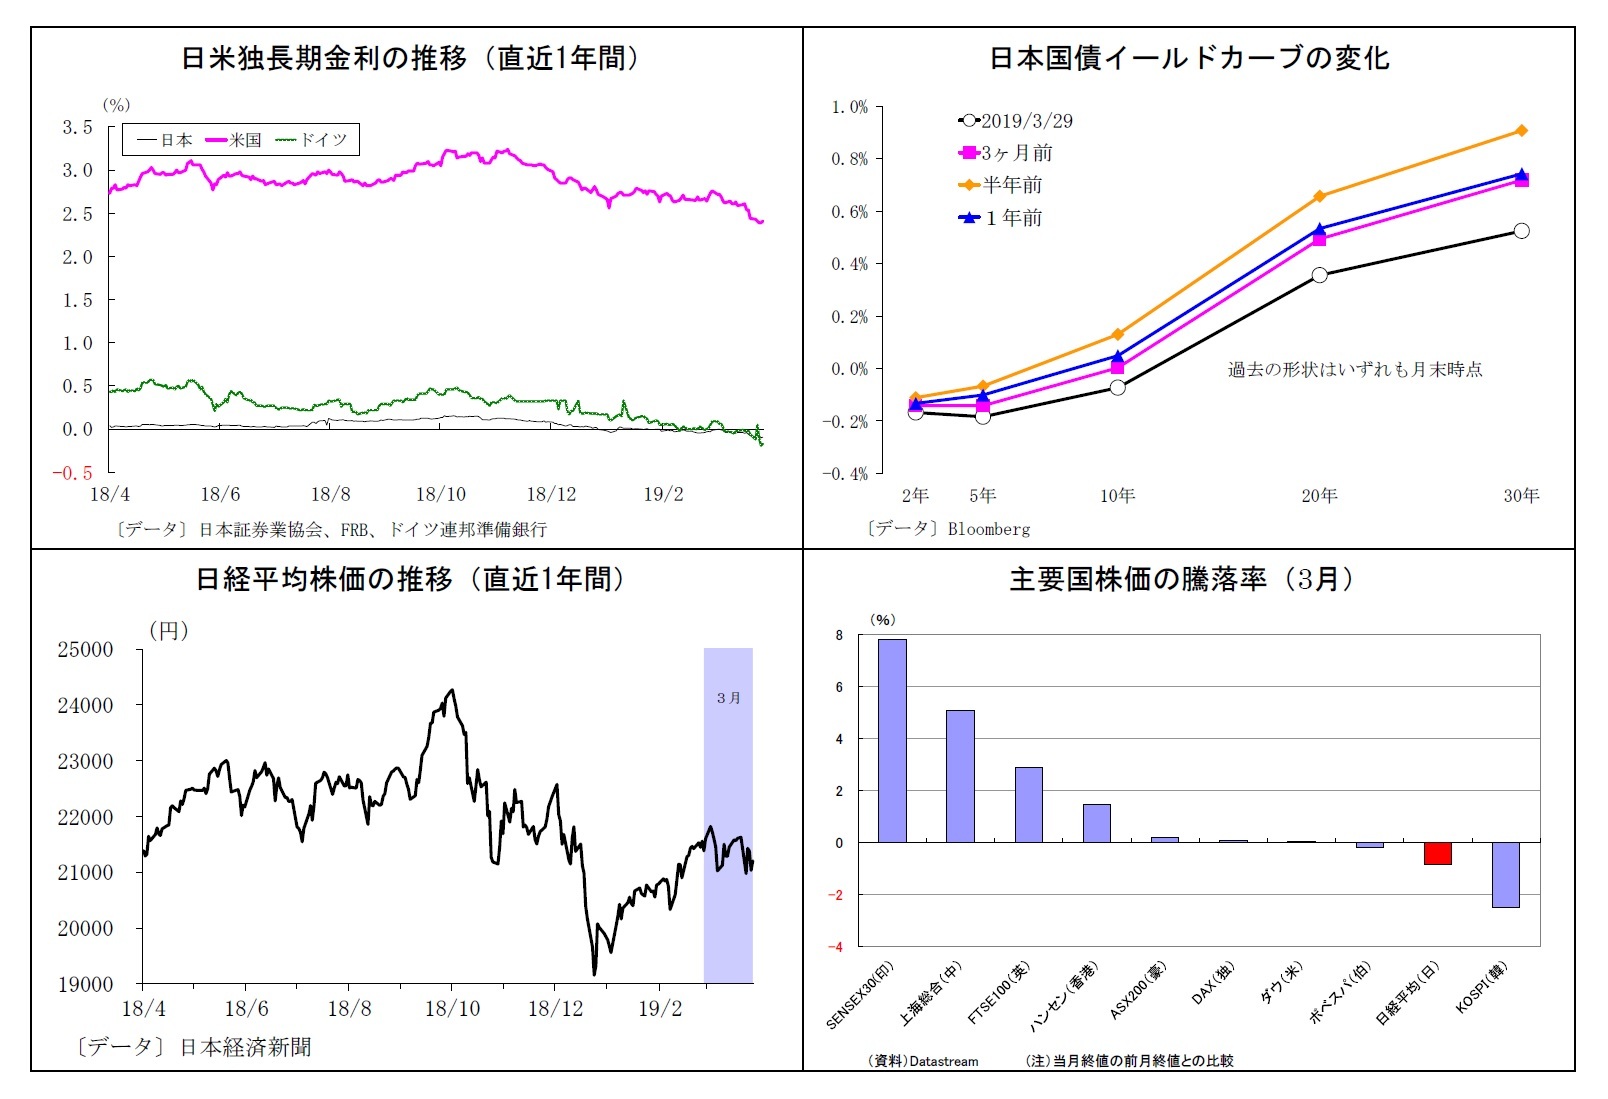 日米独長期金利の推移（直近1年間）/日本国債イールドカーブの変化/日経平均株価の推移（直近1年間）/主要国株価の騰落率（3月）